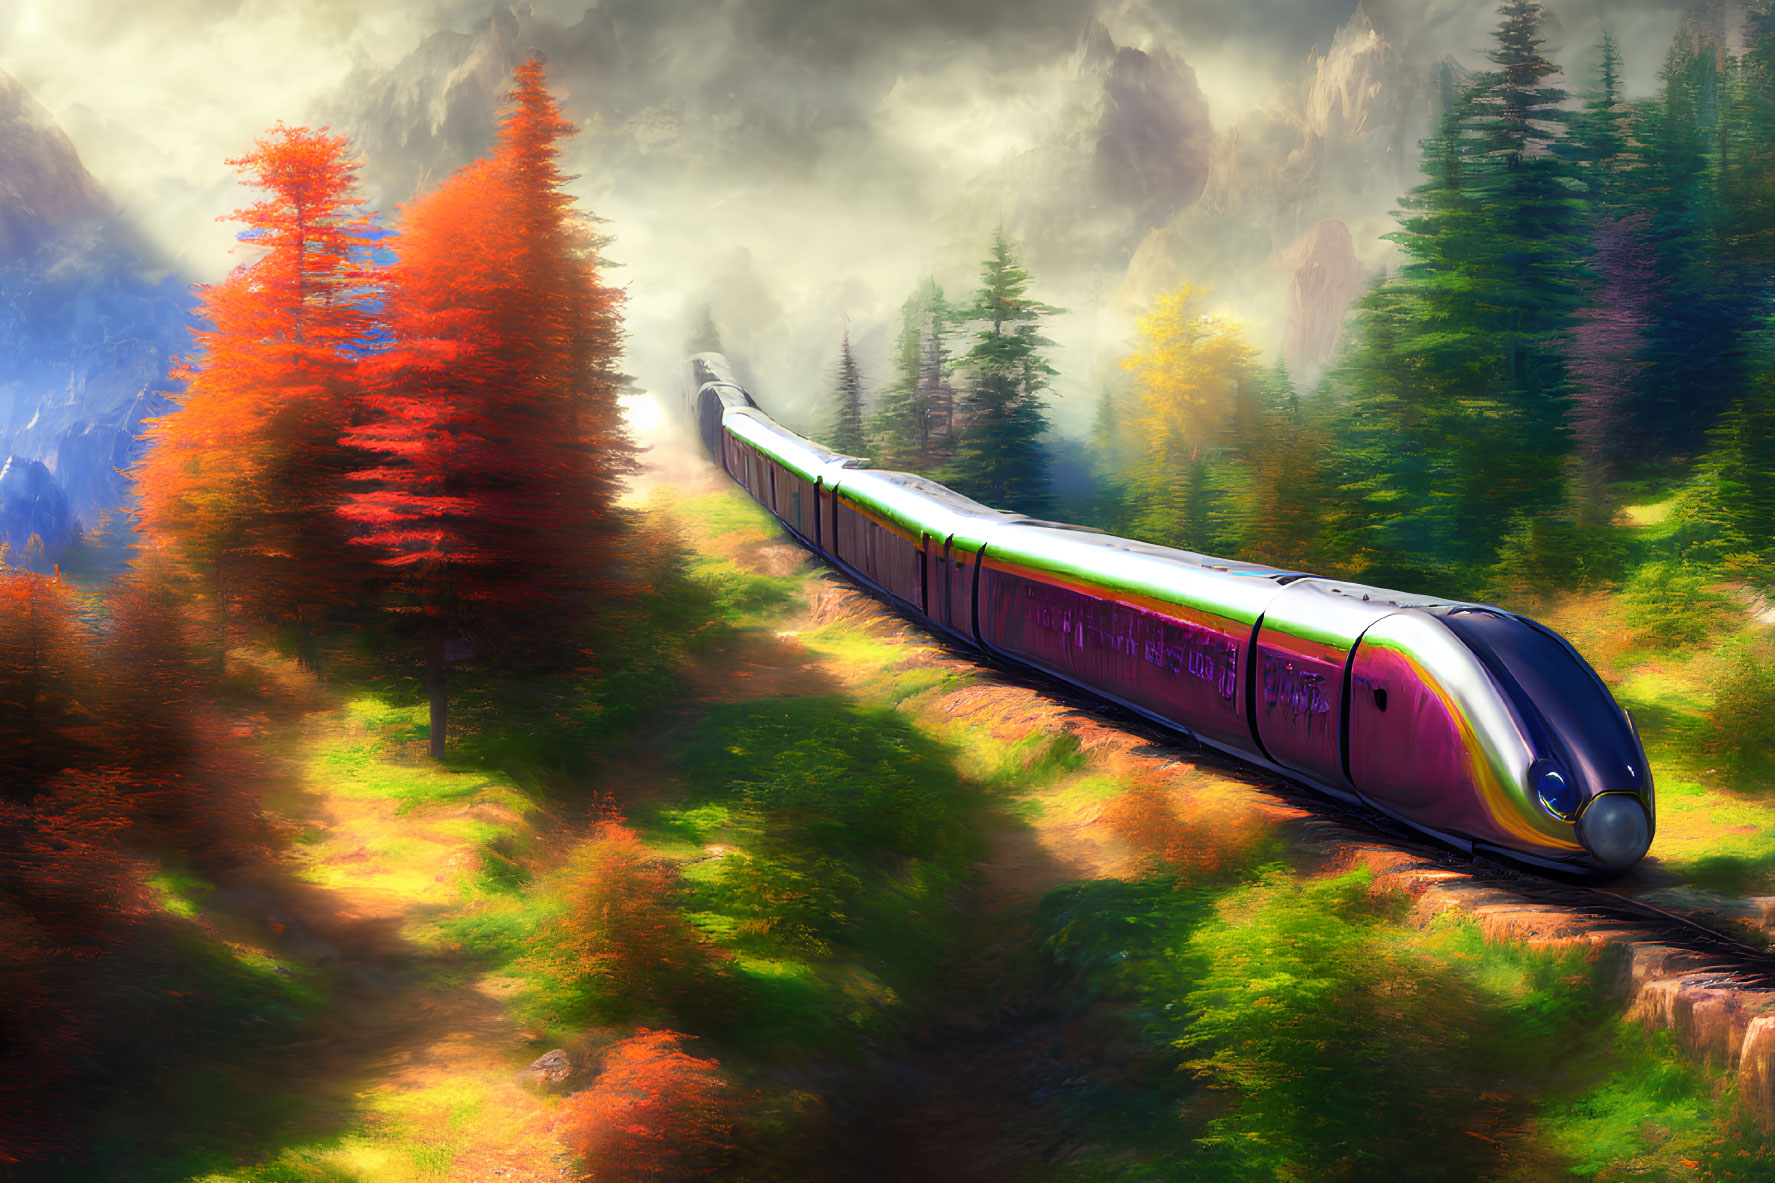 Digital Artwork: Futuristic Train in Autumn Forest